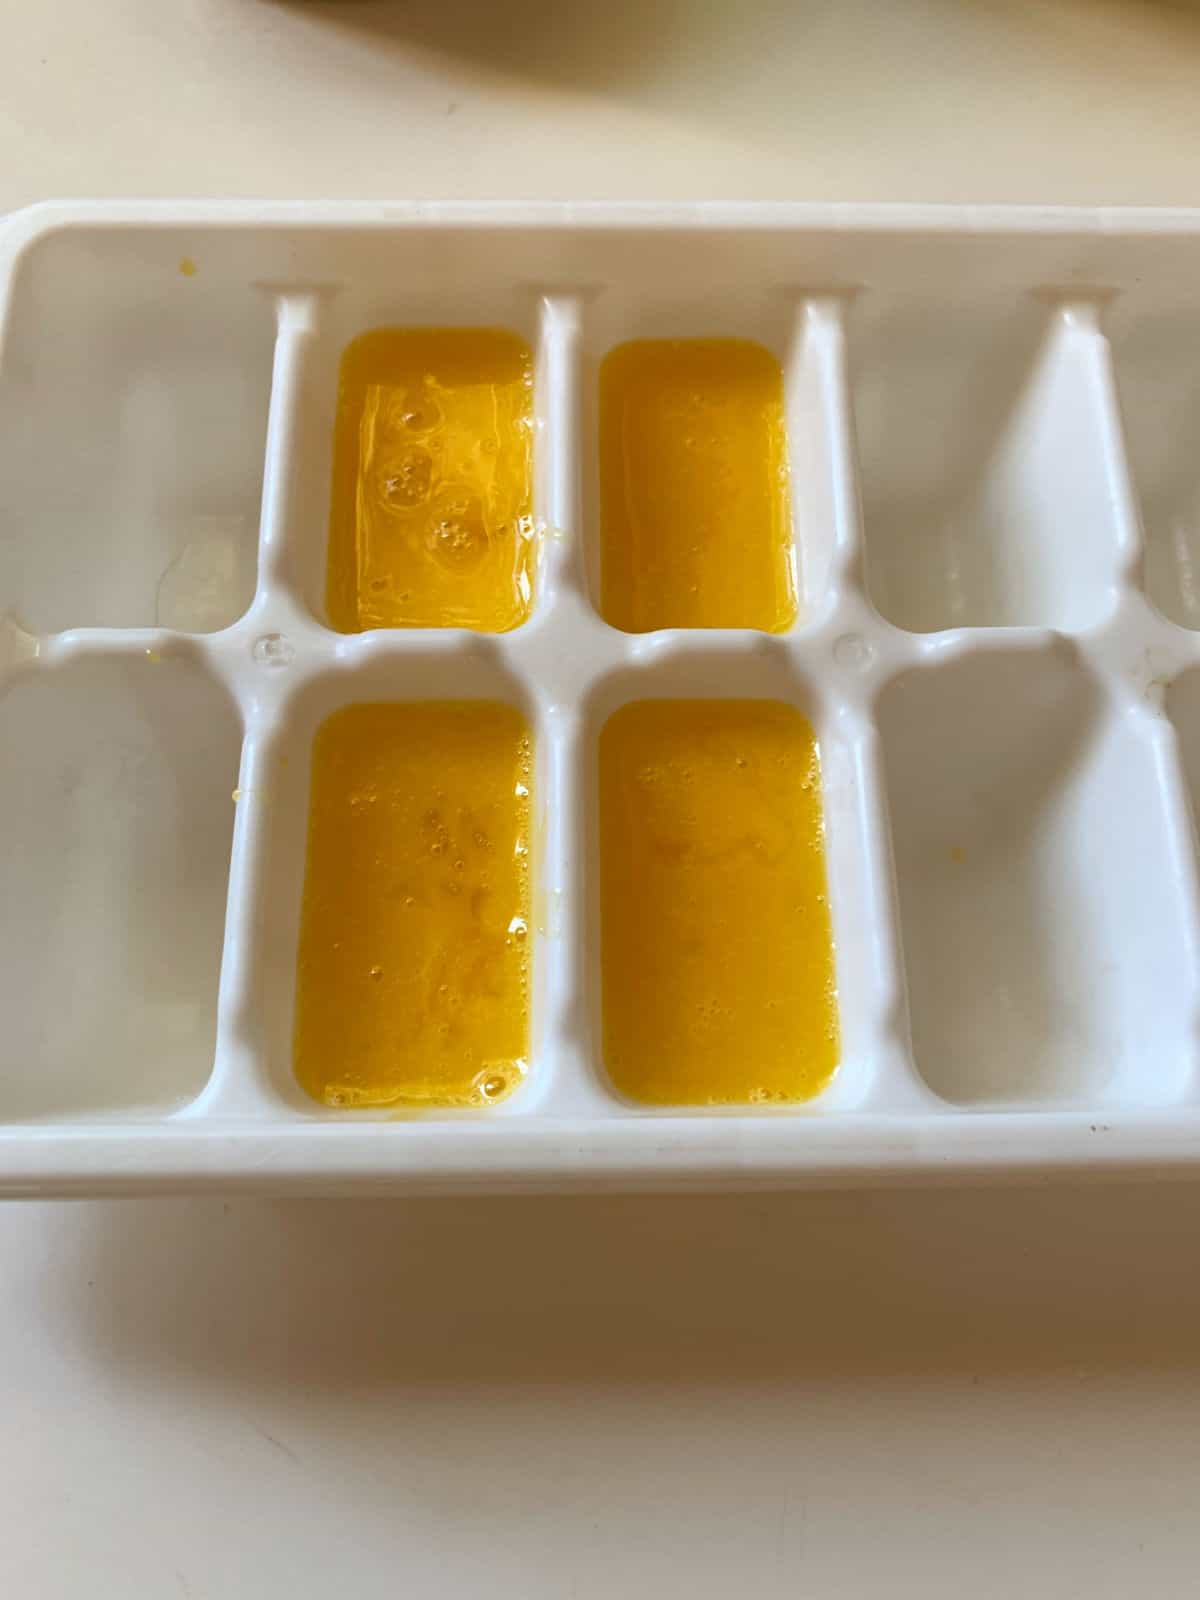 Beaten egg yolks in an ice cube tray.